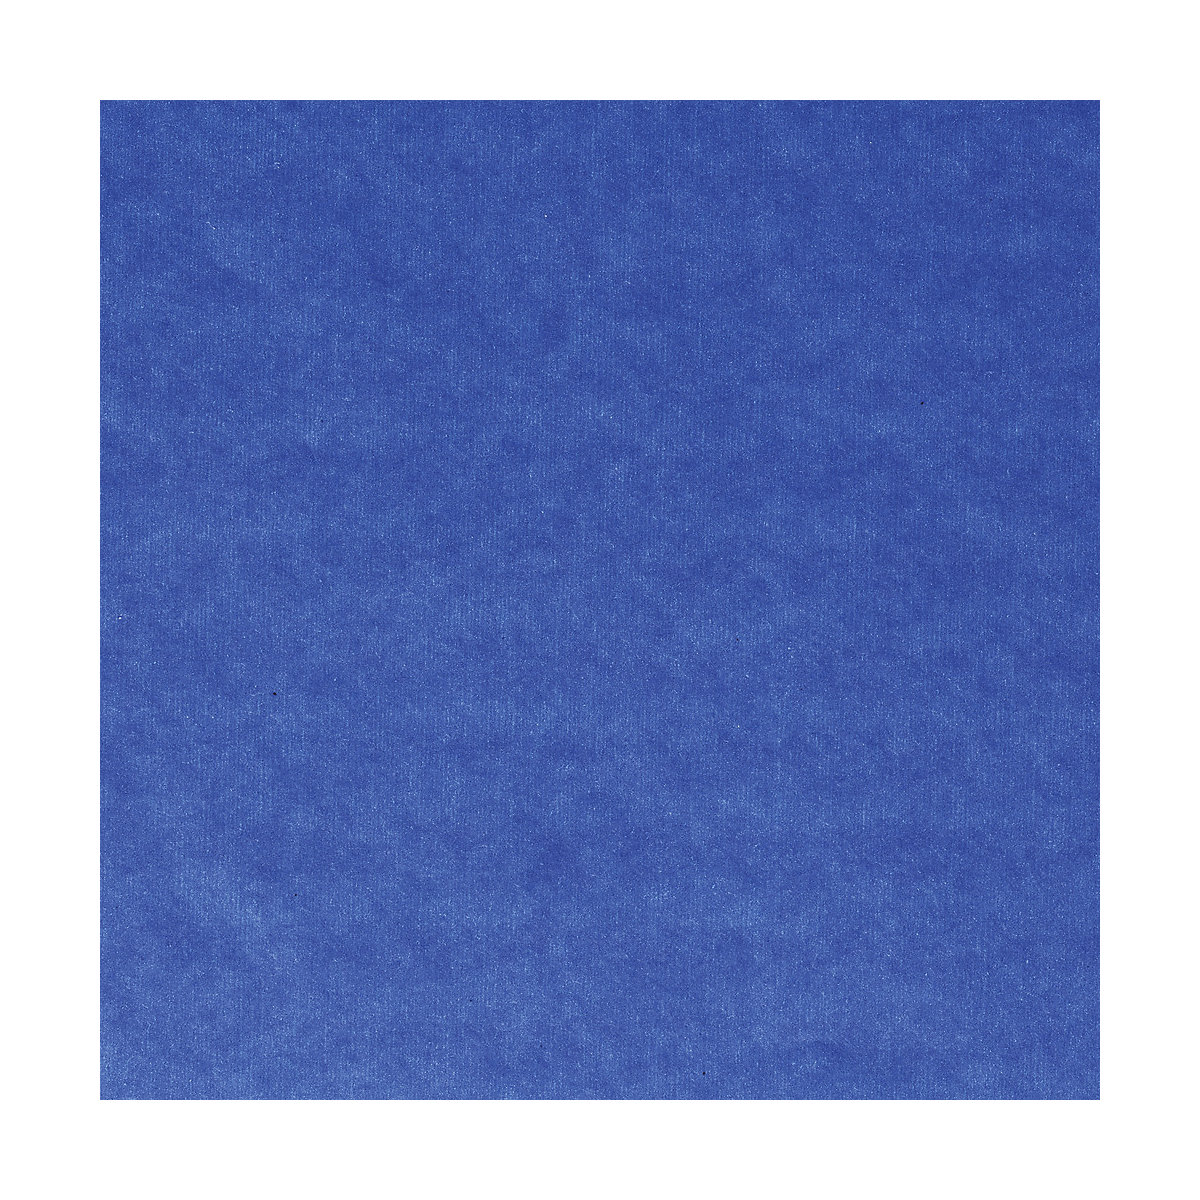 Geschenk-Seidenpapier, 30 g/m², Bogenformat 750 x 500 mm, blau, VE 880 Stk, ab 10 VE-3